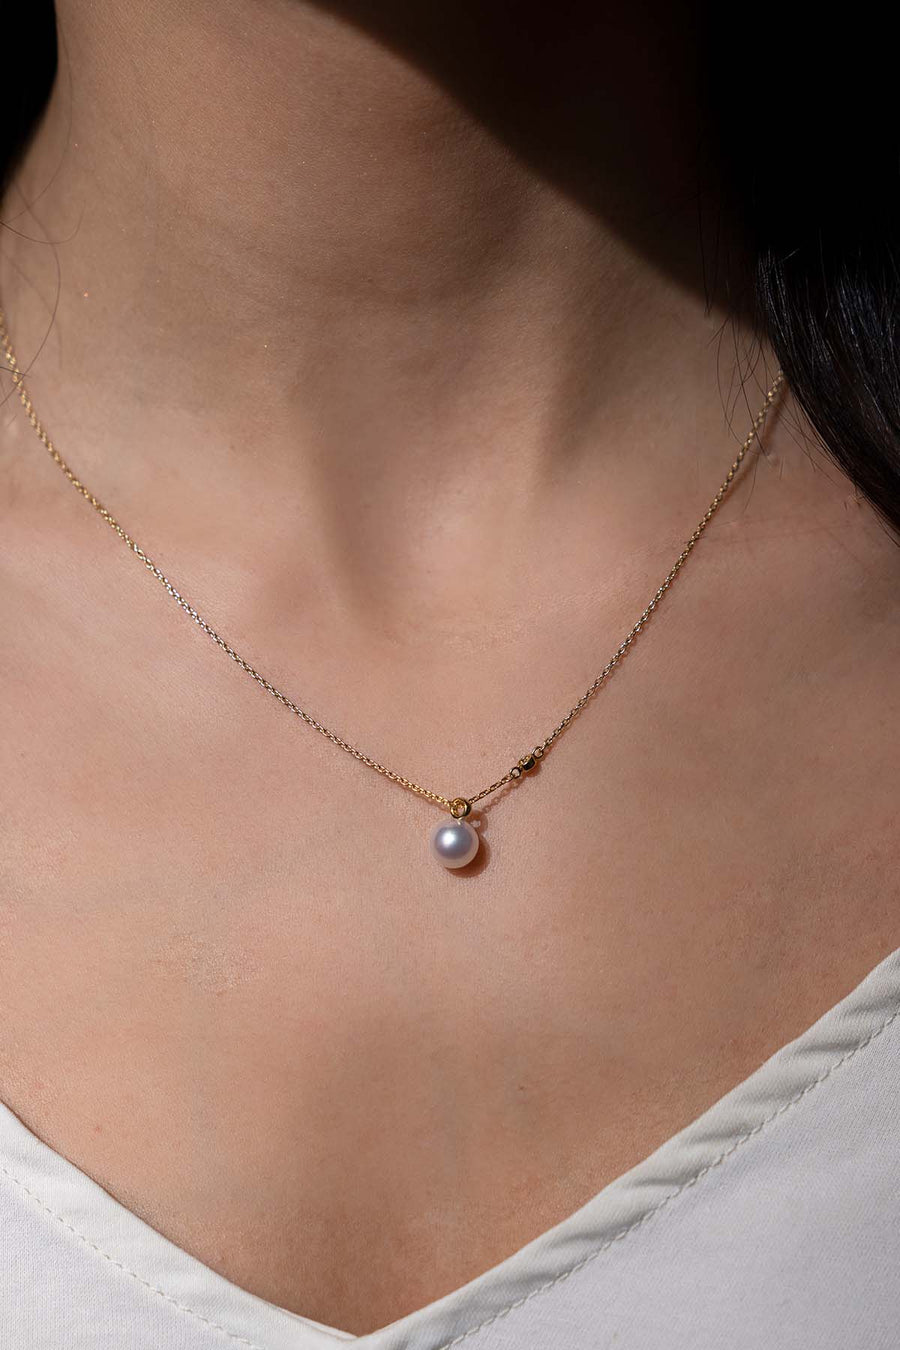 Mikimoto Pearl Pendant with Diamond Necklace